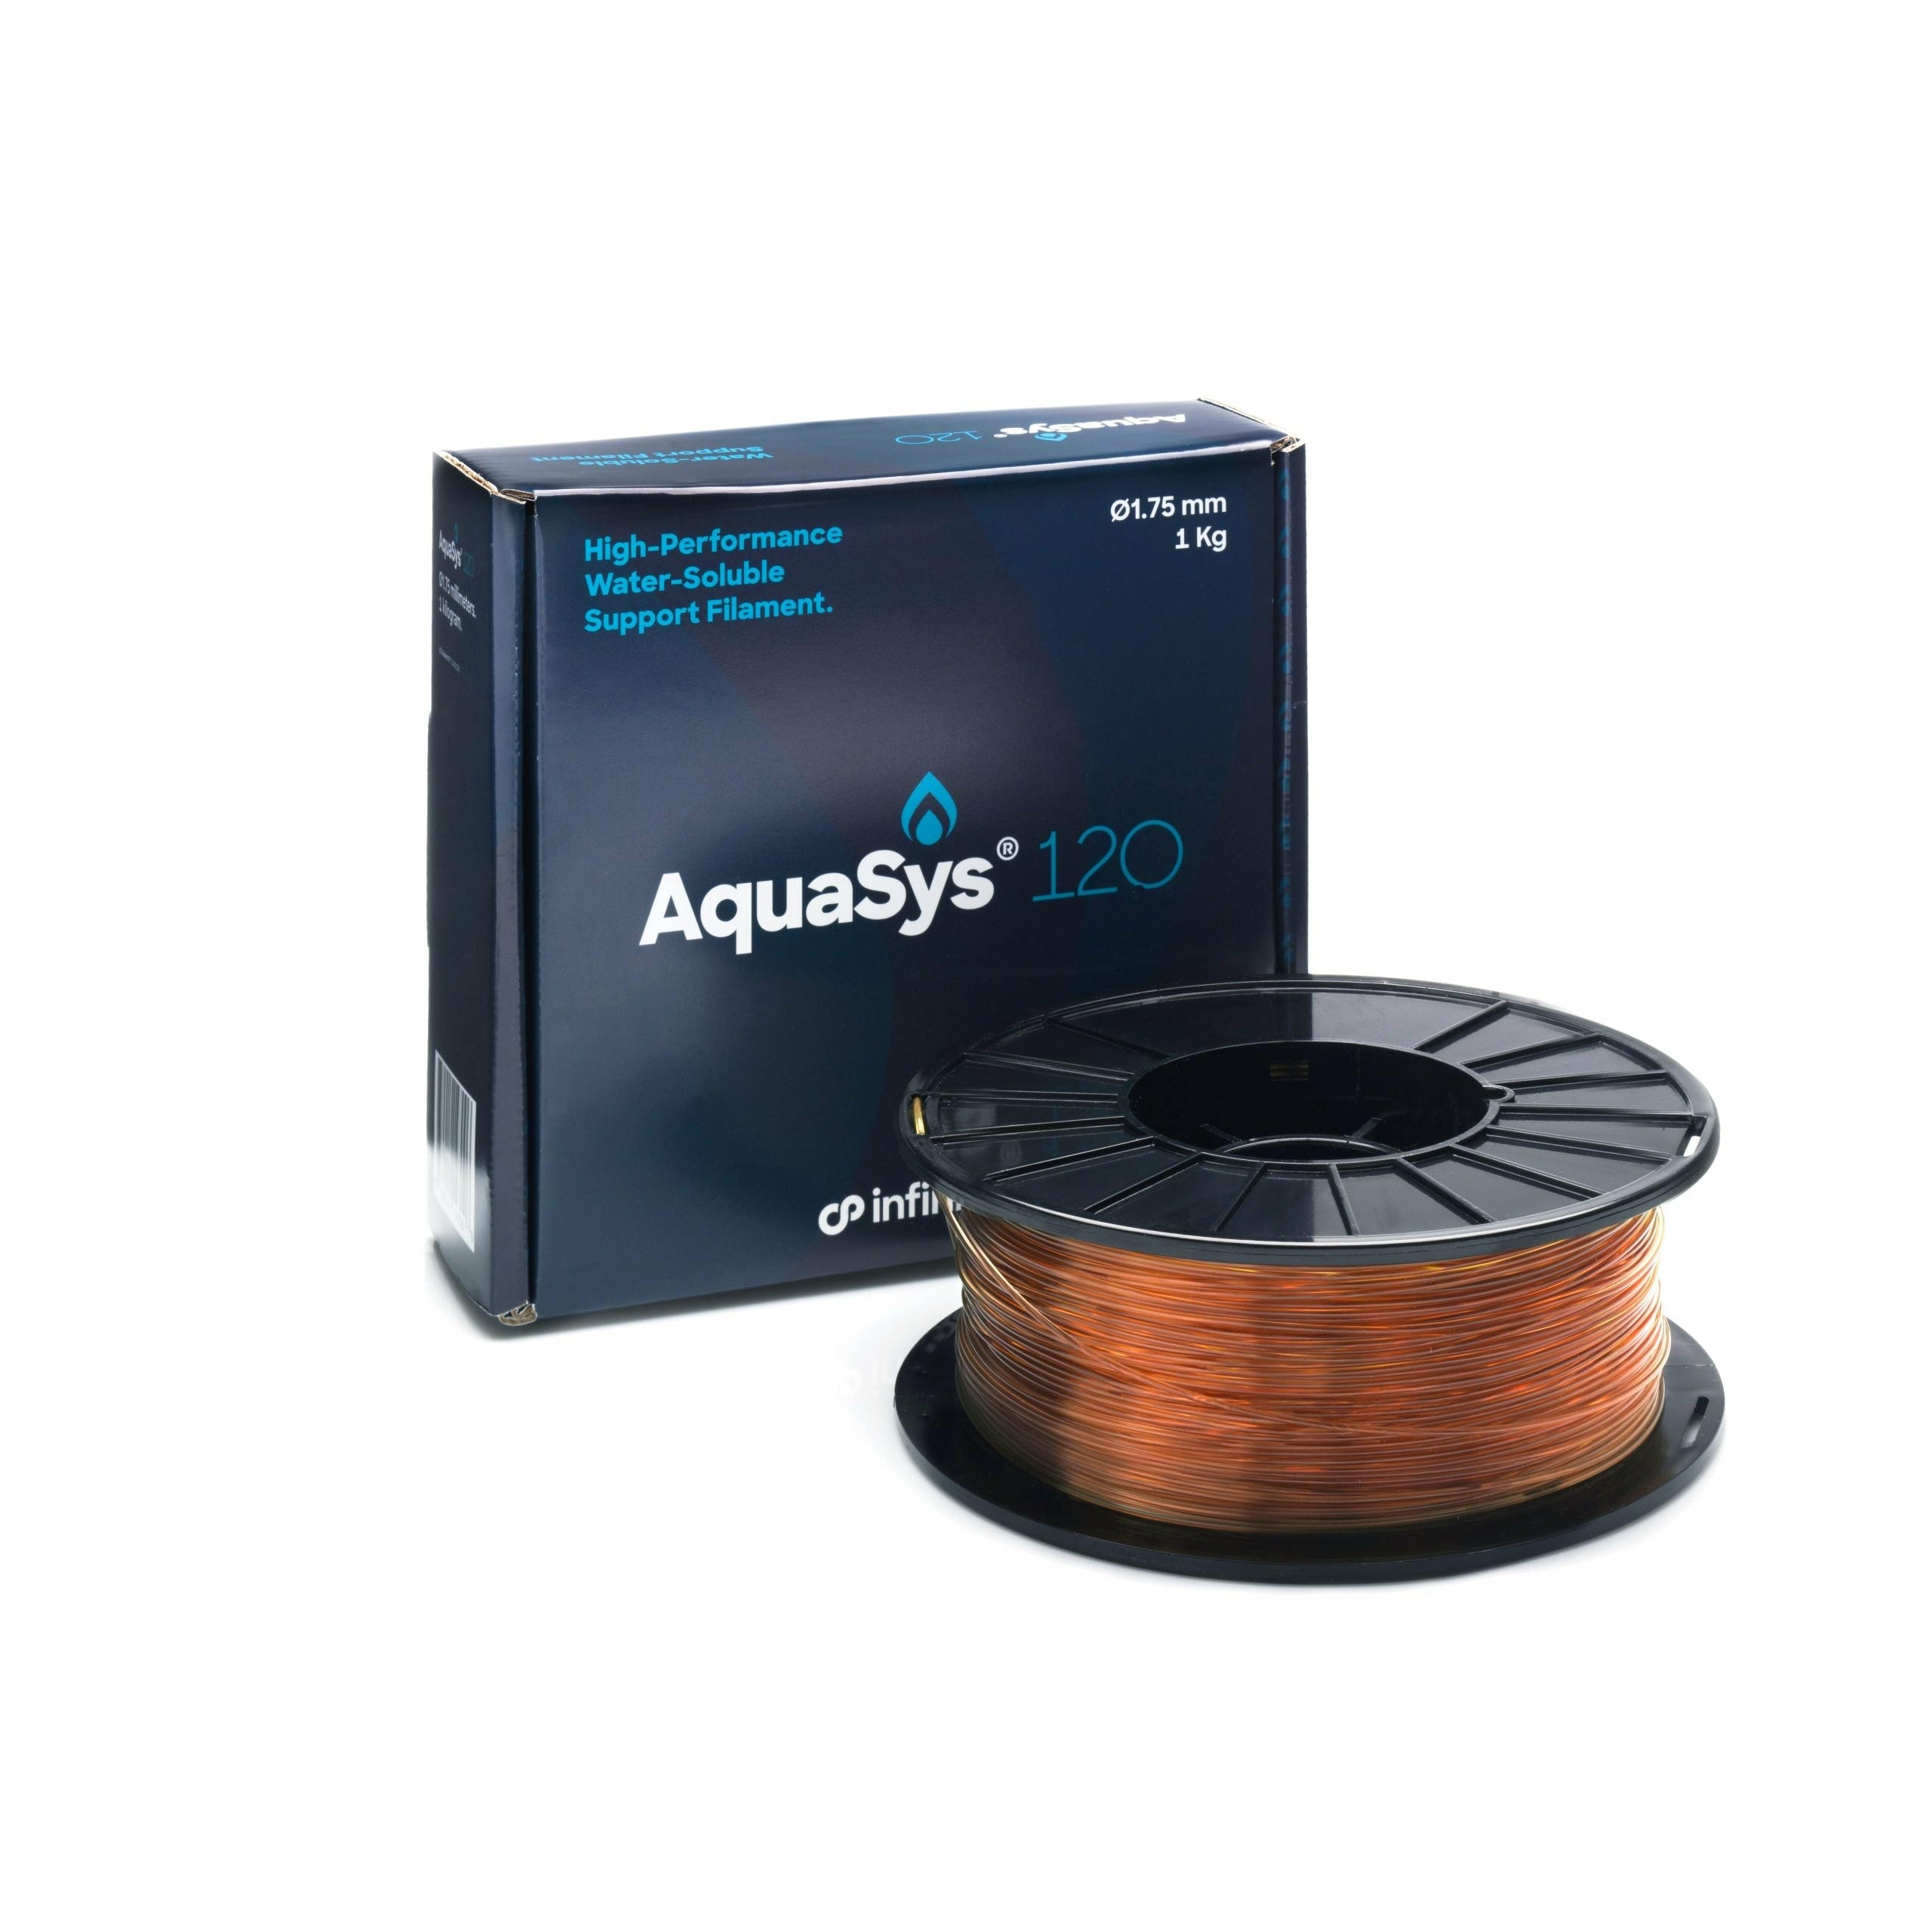 aquasys-120-filament-infinite-material-solutions-175mm-1kg-natural-indicate-technologies-379167